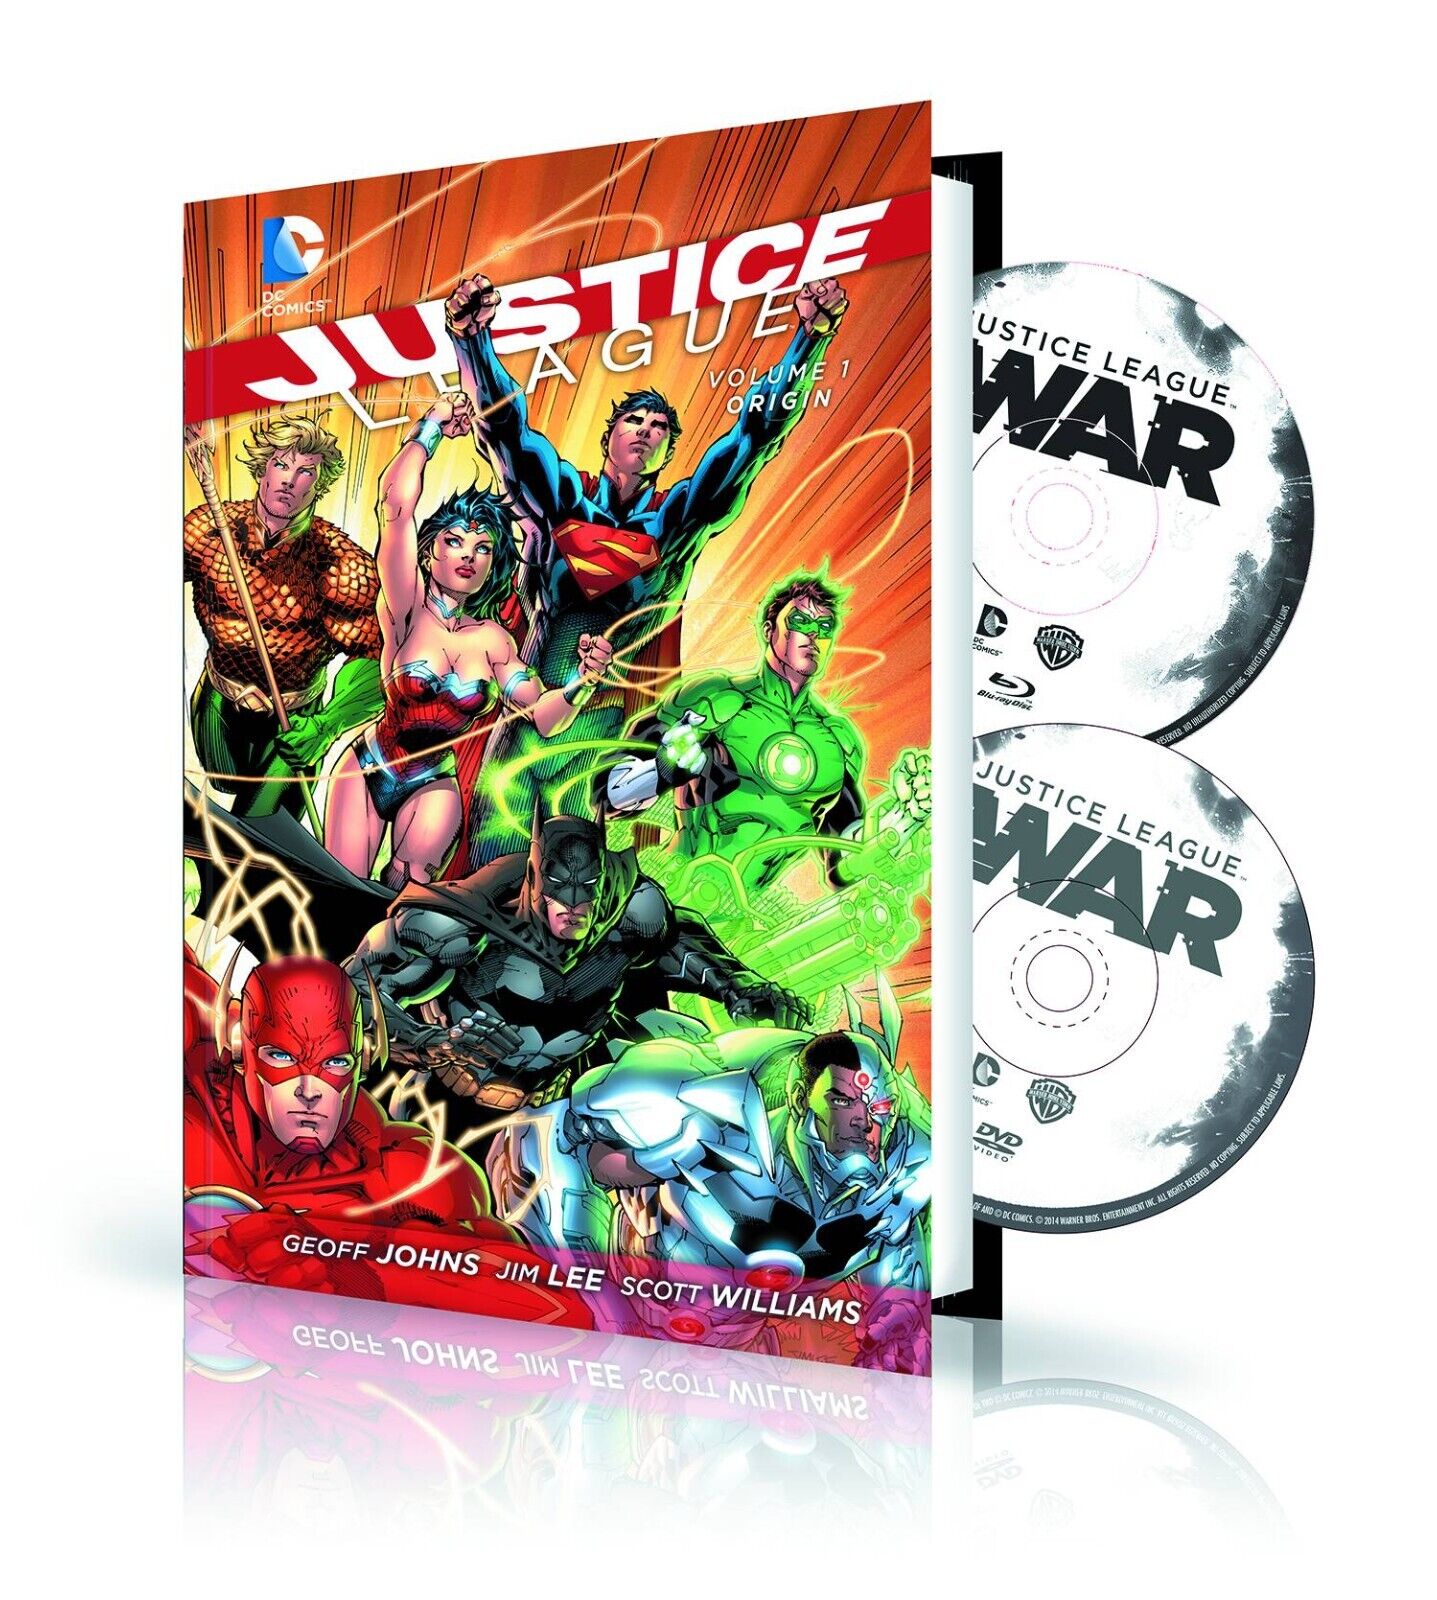 DC COMICS JUSTICE LEAGUE VOL 1 ORIGIN HARDCOVER HC AND DVD BLU RAY SET SUPERMAN